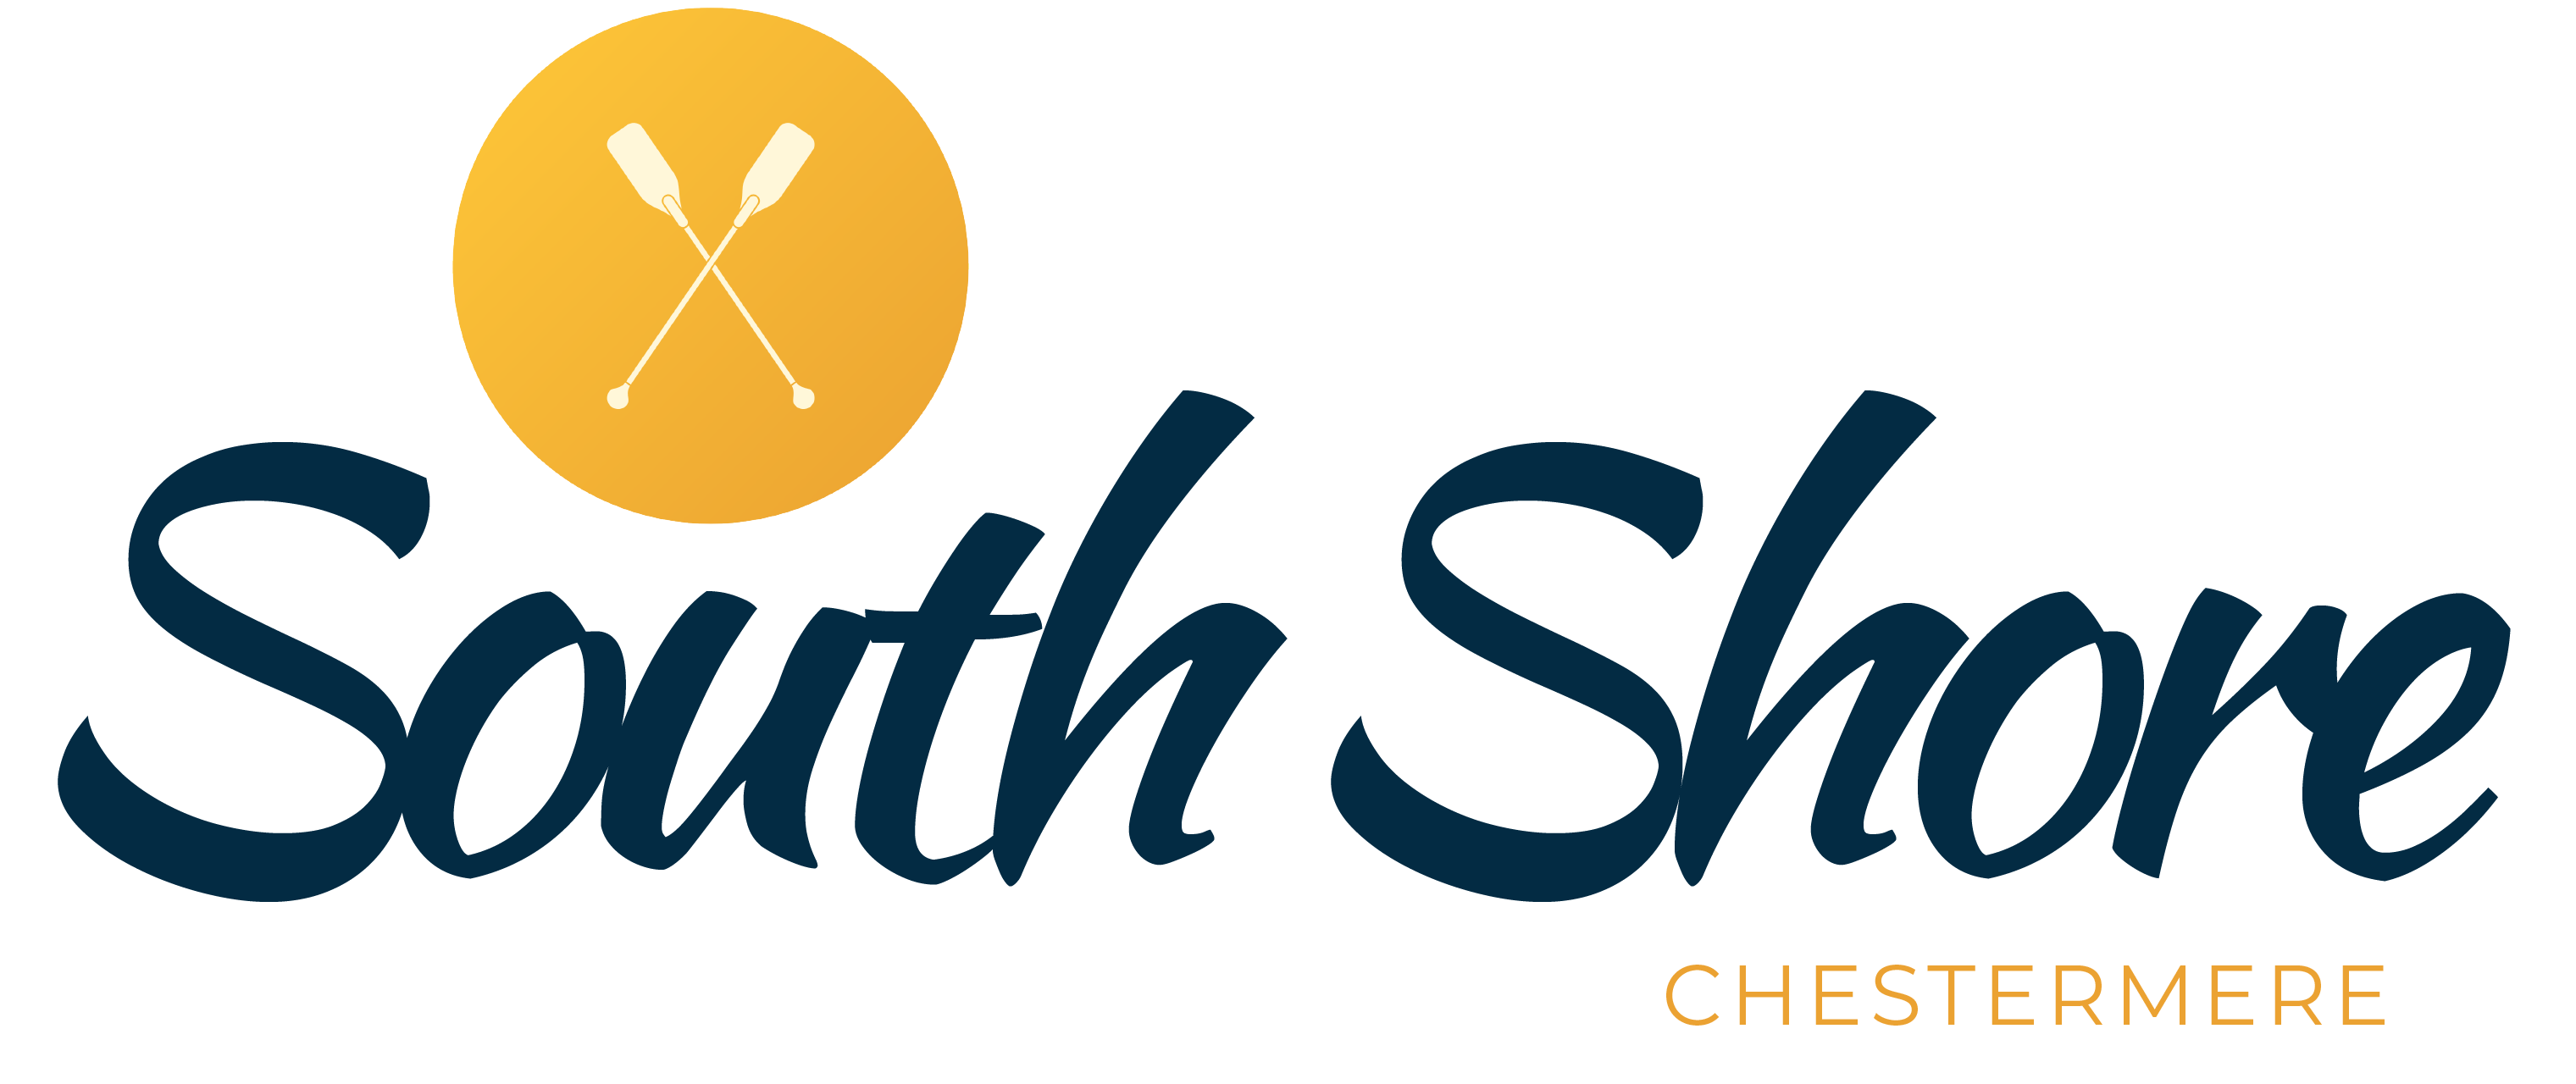 South Shore Chestermere Logo Dark